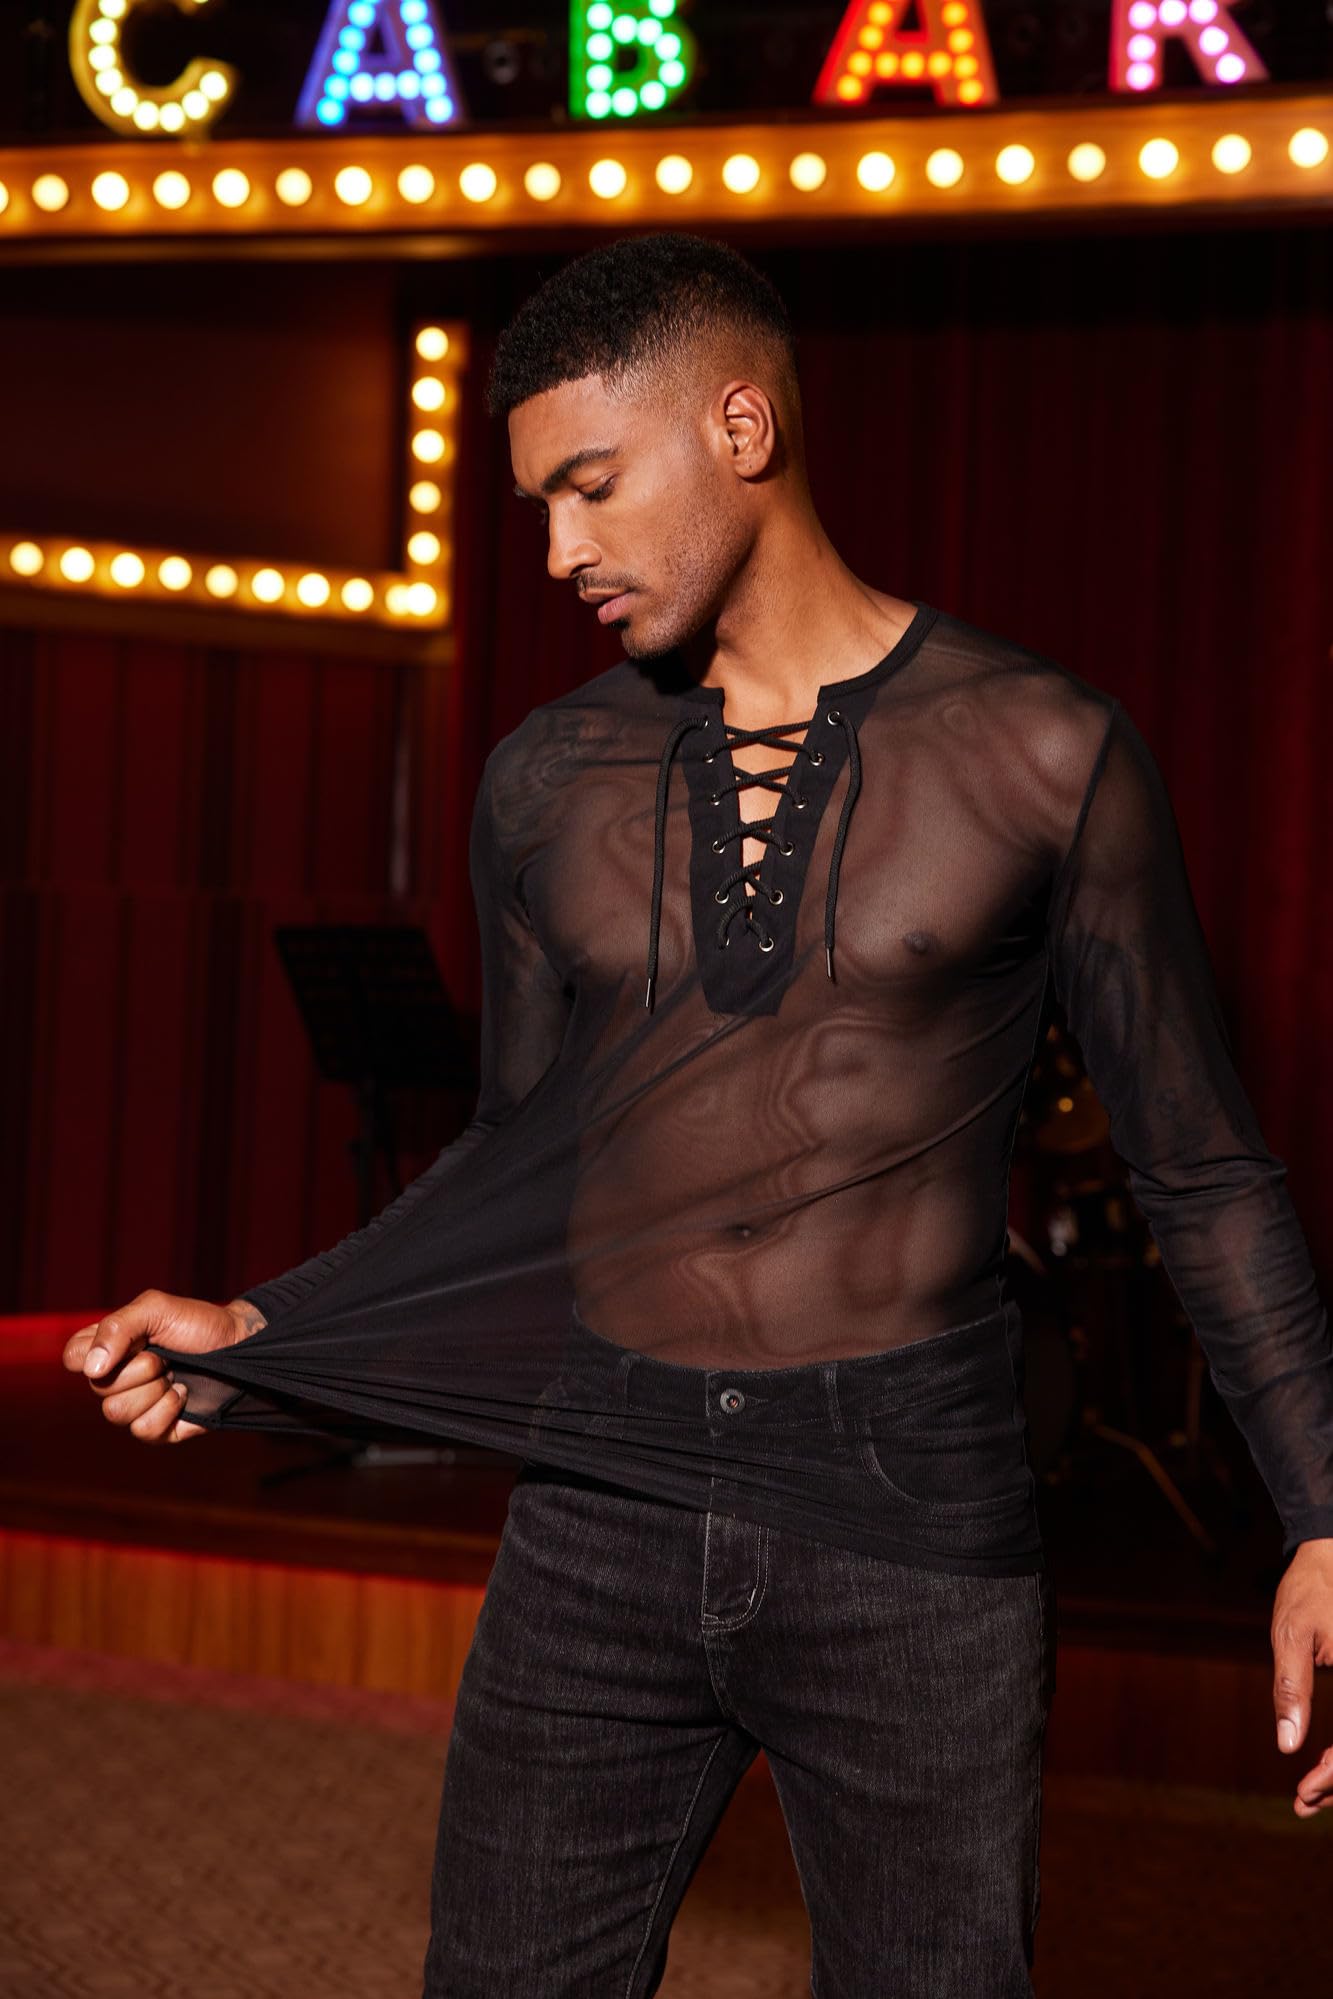 Coofandy Mens Sexy Lace up See Through Long Sleeve T Shirt Mesh Undershirts, Black, Medium